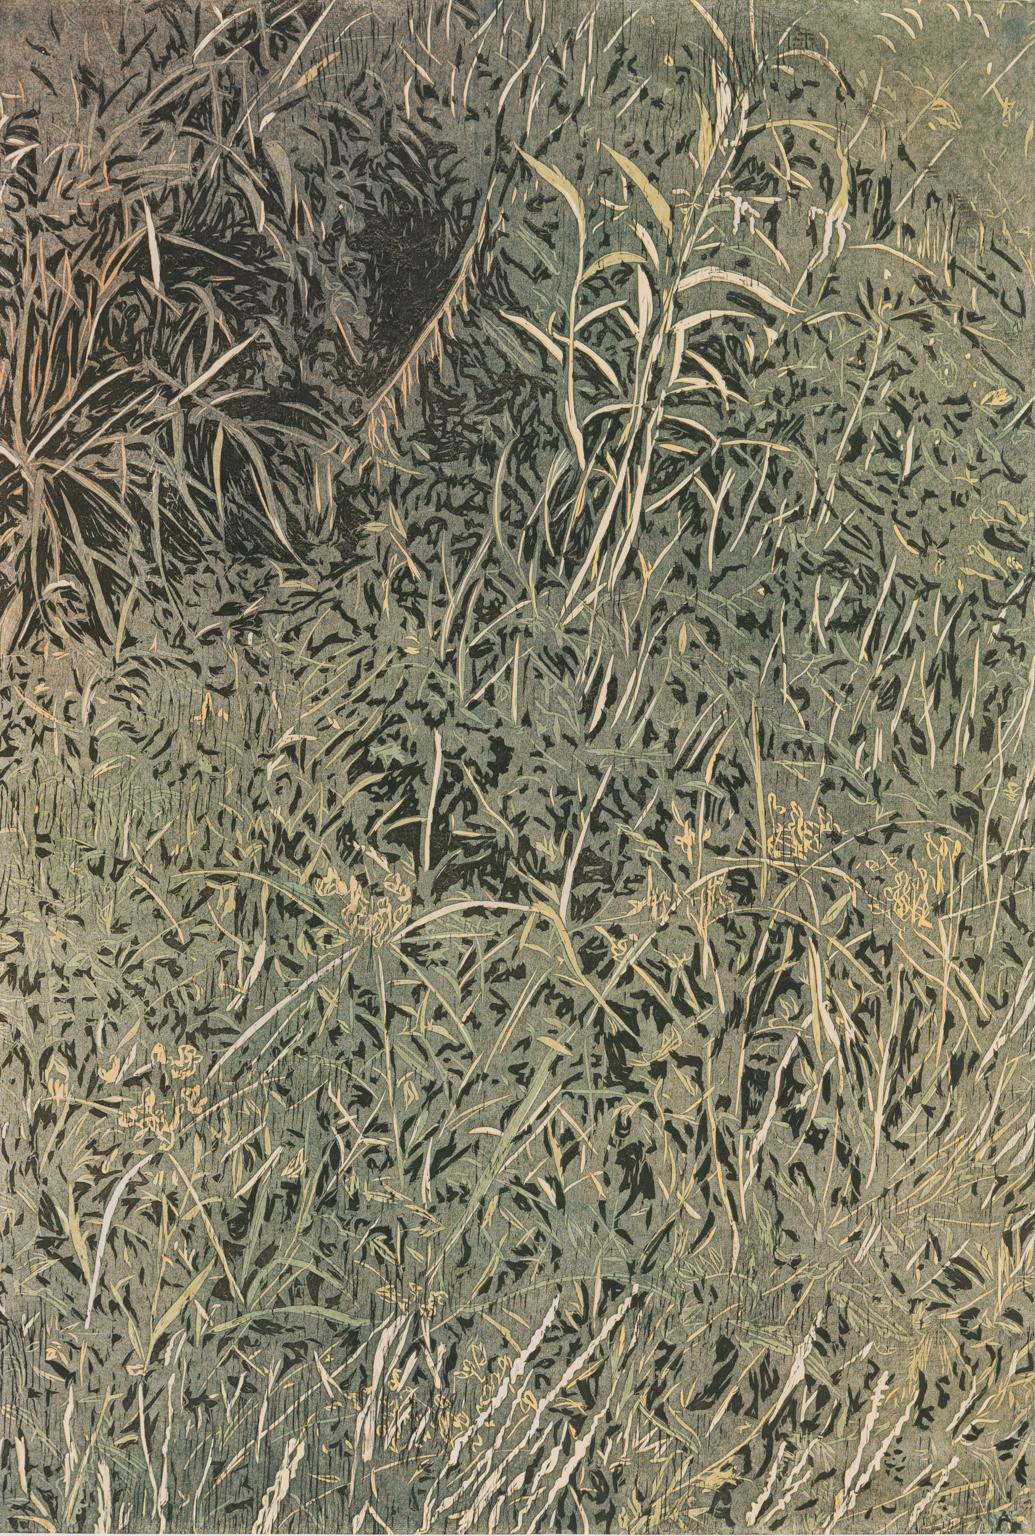 Running Grass - Linocut Print of Overgrown Grass in Greens and Yellow